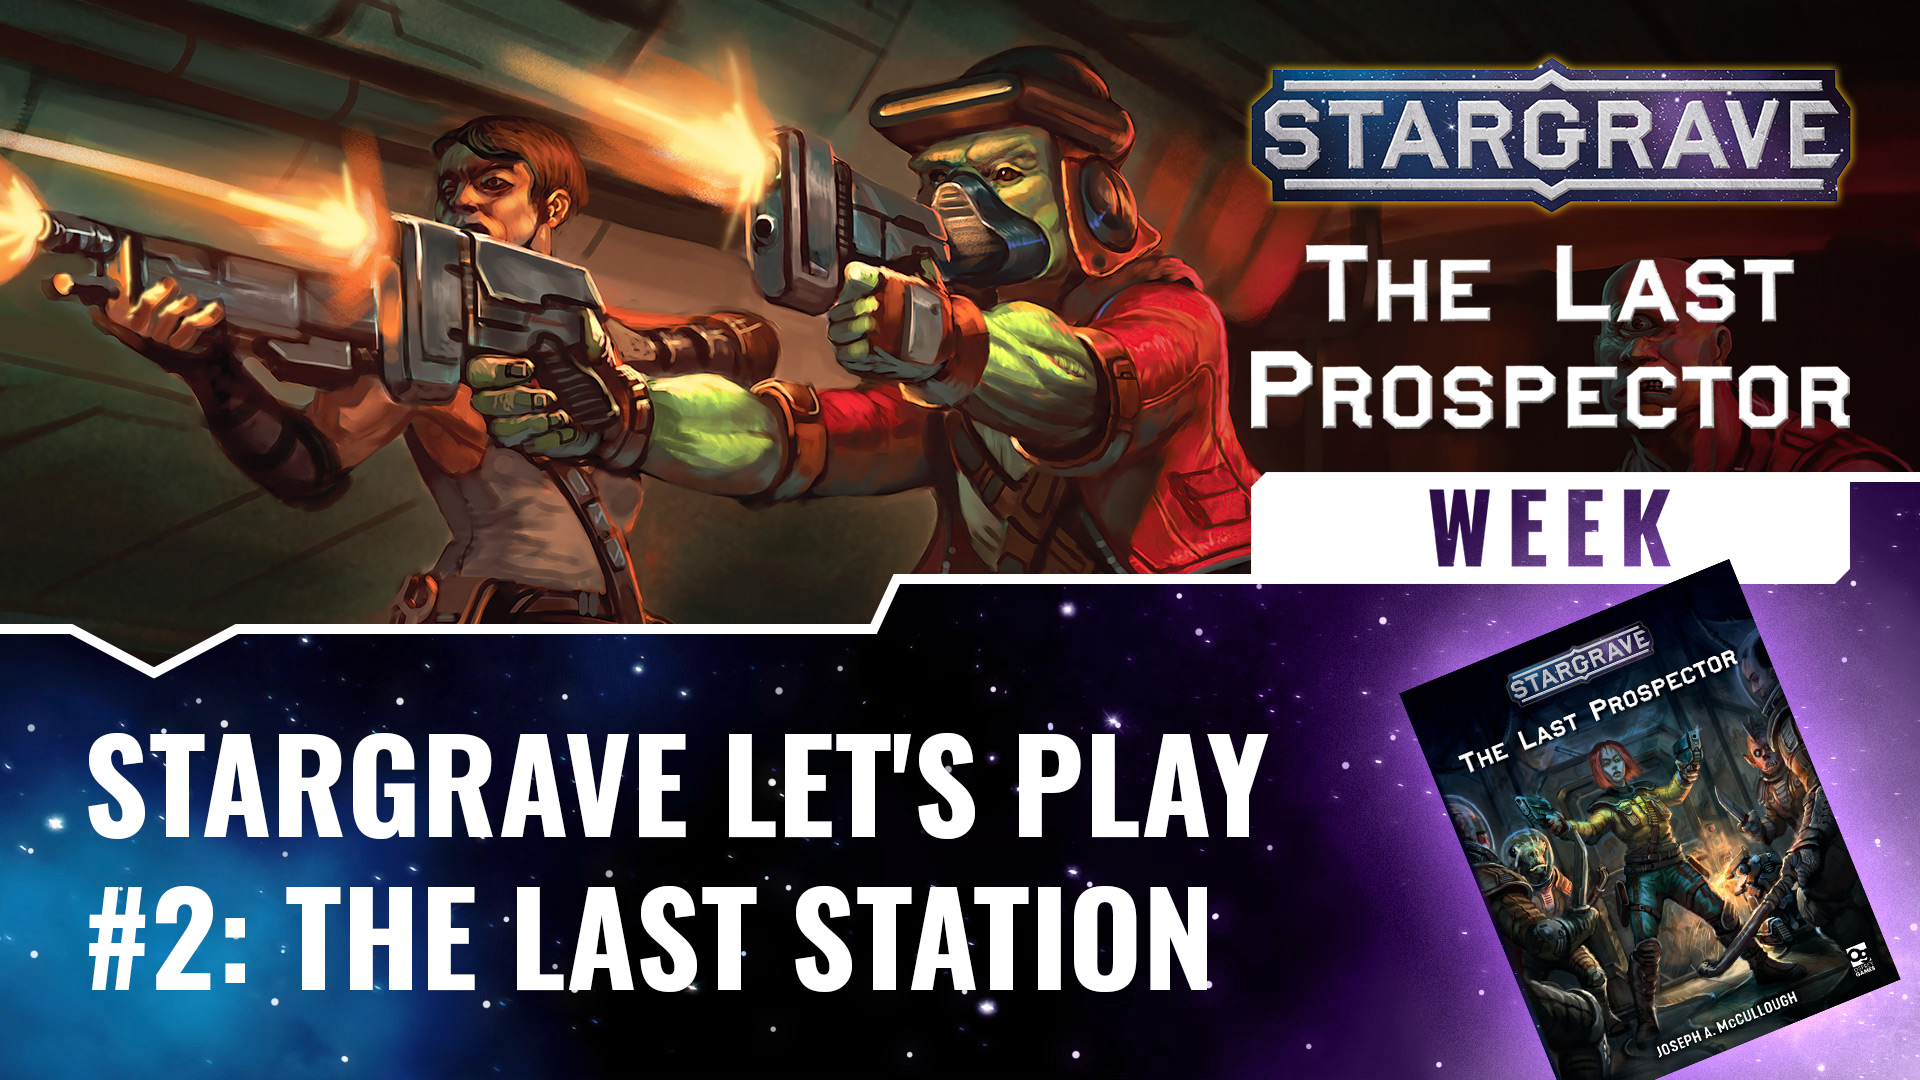 Stargrave_Week_Cover_3_-_Stargrave_Lets_Play_2_The_Last_Station